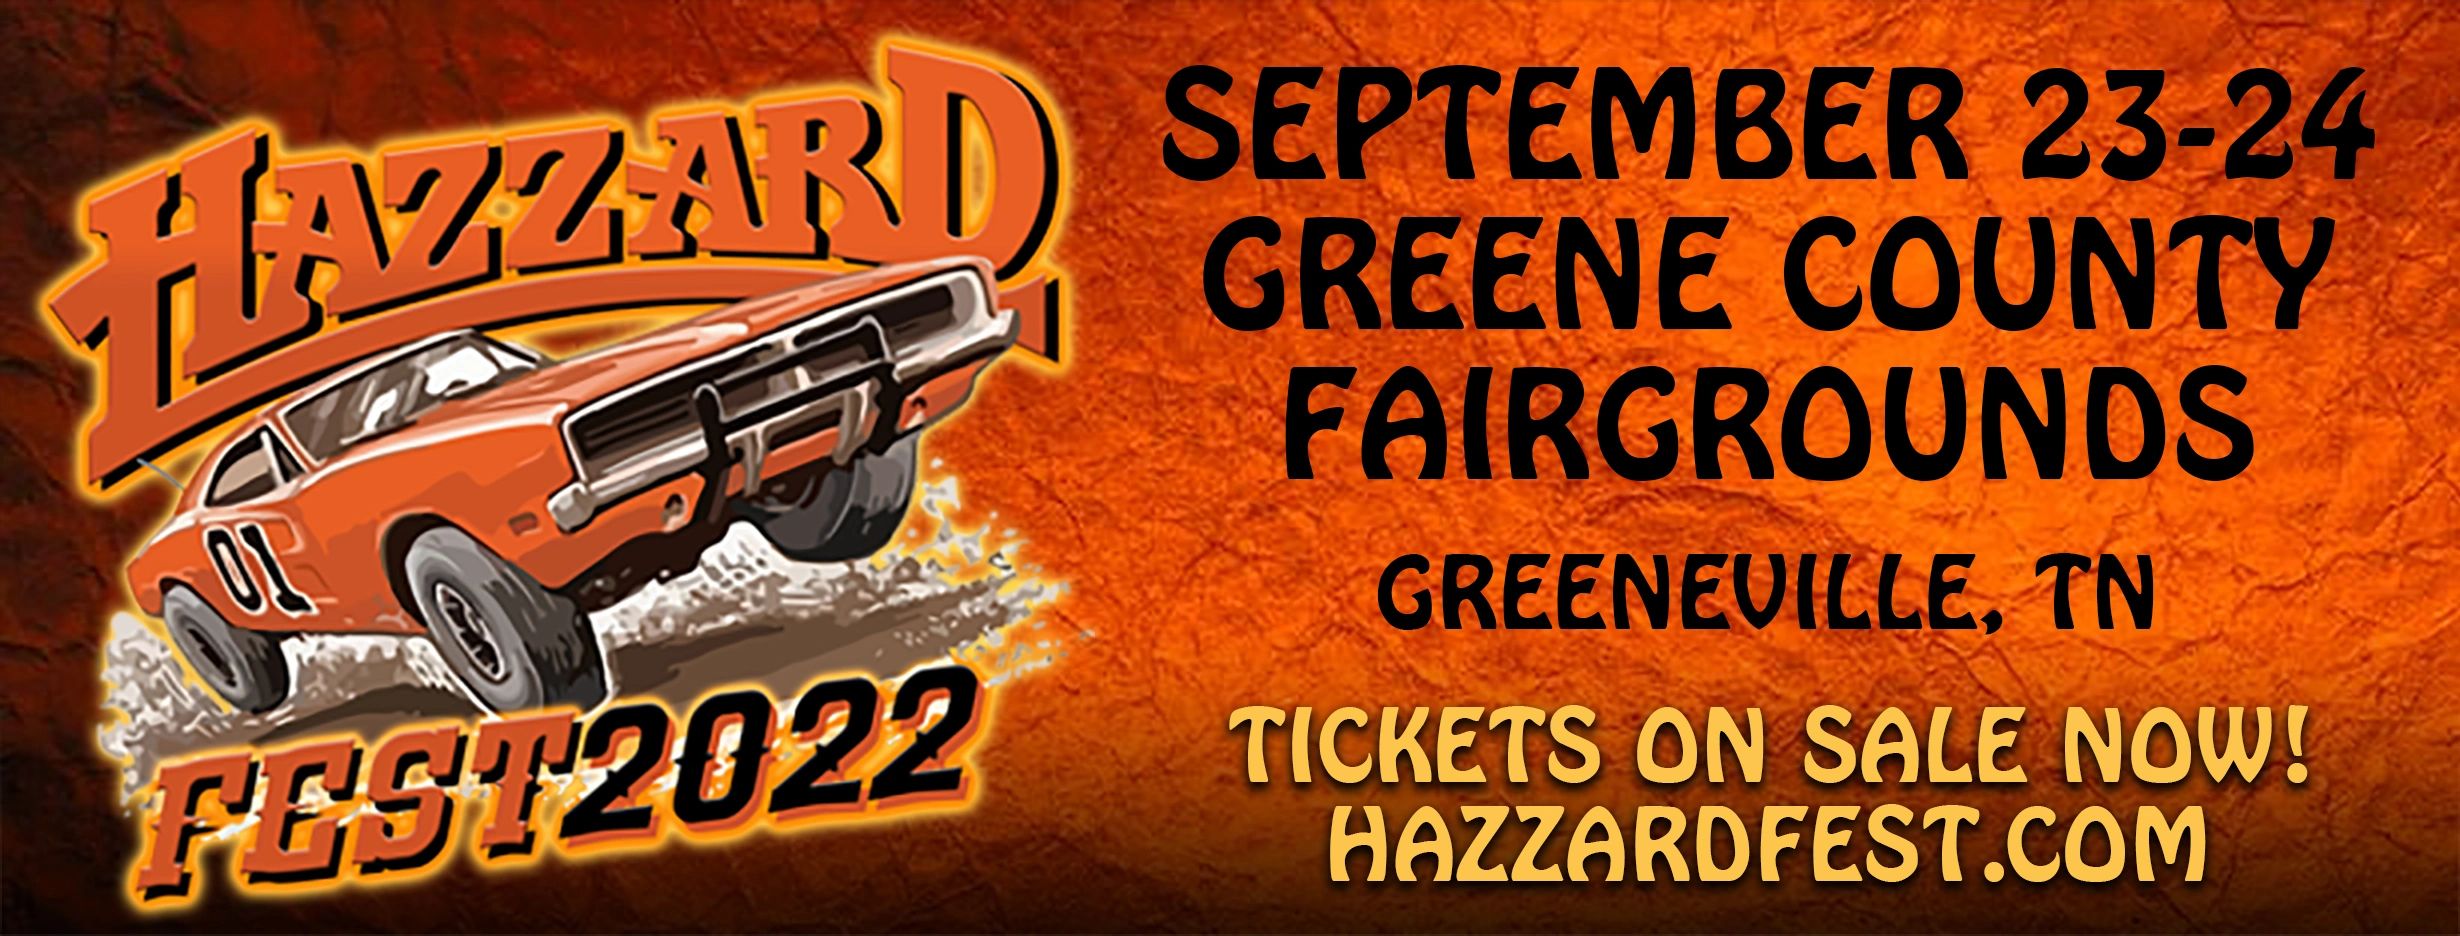 Hazzard Fest Festival, Concerts, Comedy, Car Show, Wrestling